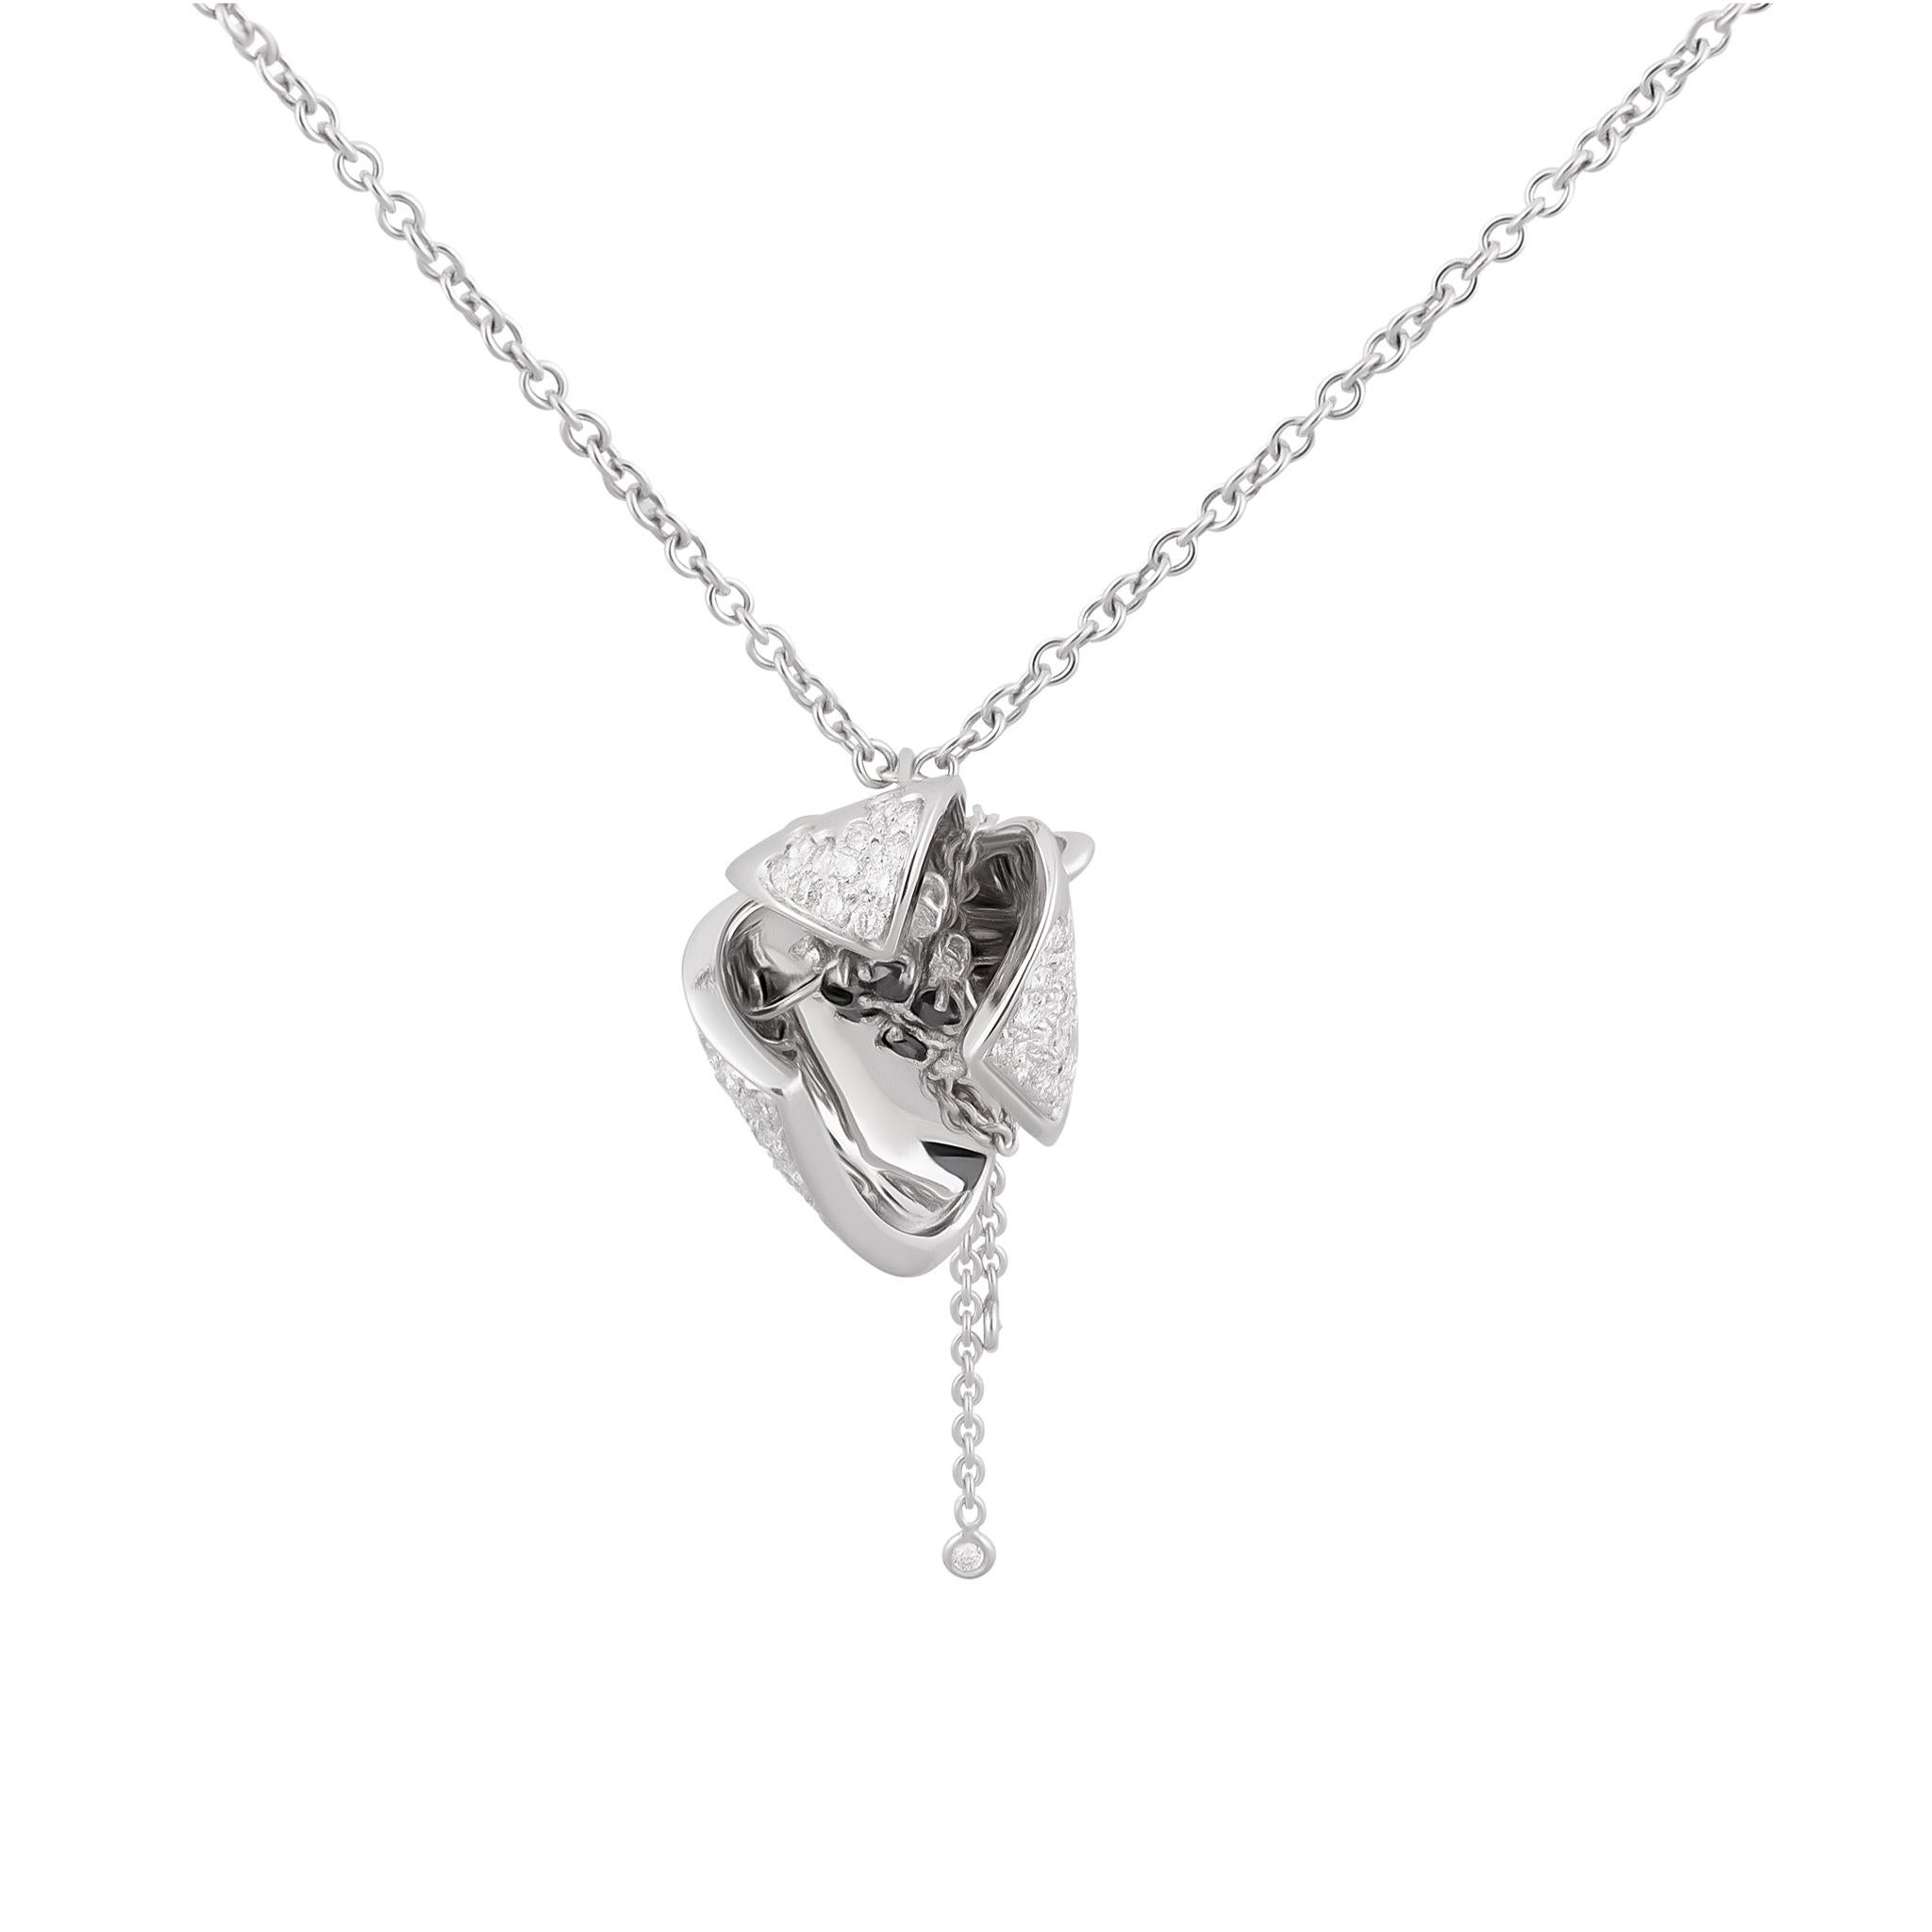 IO SI by Stefan Hafner Necklace
18K White Gold
Diamond: 1.61ctw
Italian made
Retail price: $14,725.00
SKU: BLU01932